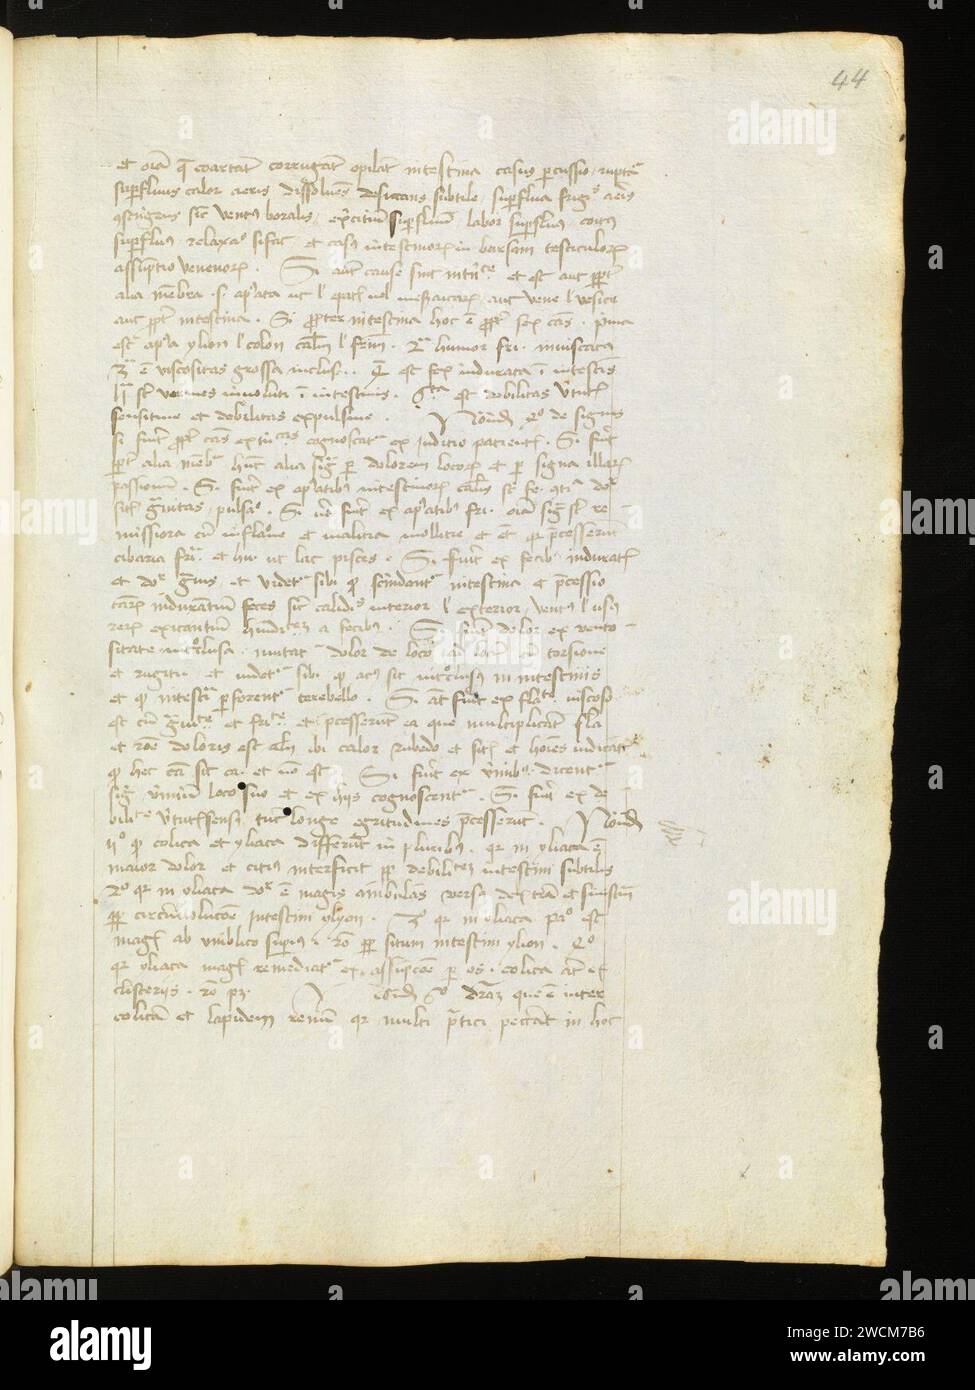 Aarau, Aargauer Kantonsbibliothek, MsMurF 85, F. 2 0044r – Antonius Guainerius, Tractatus medicinales. Banque D'Images